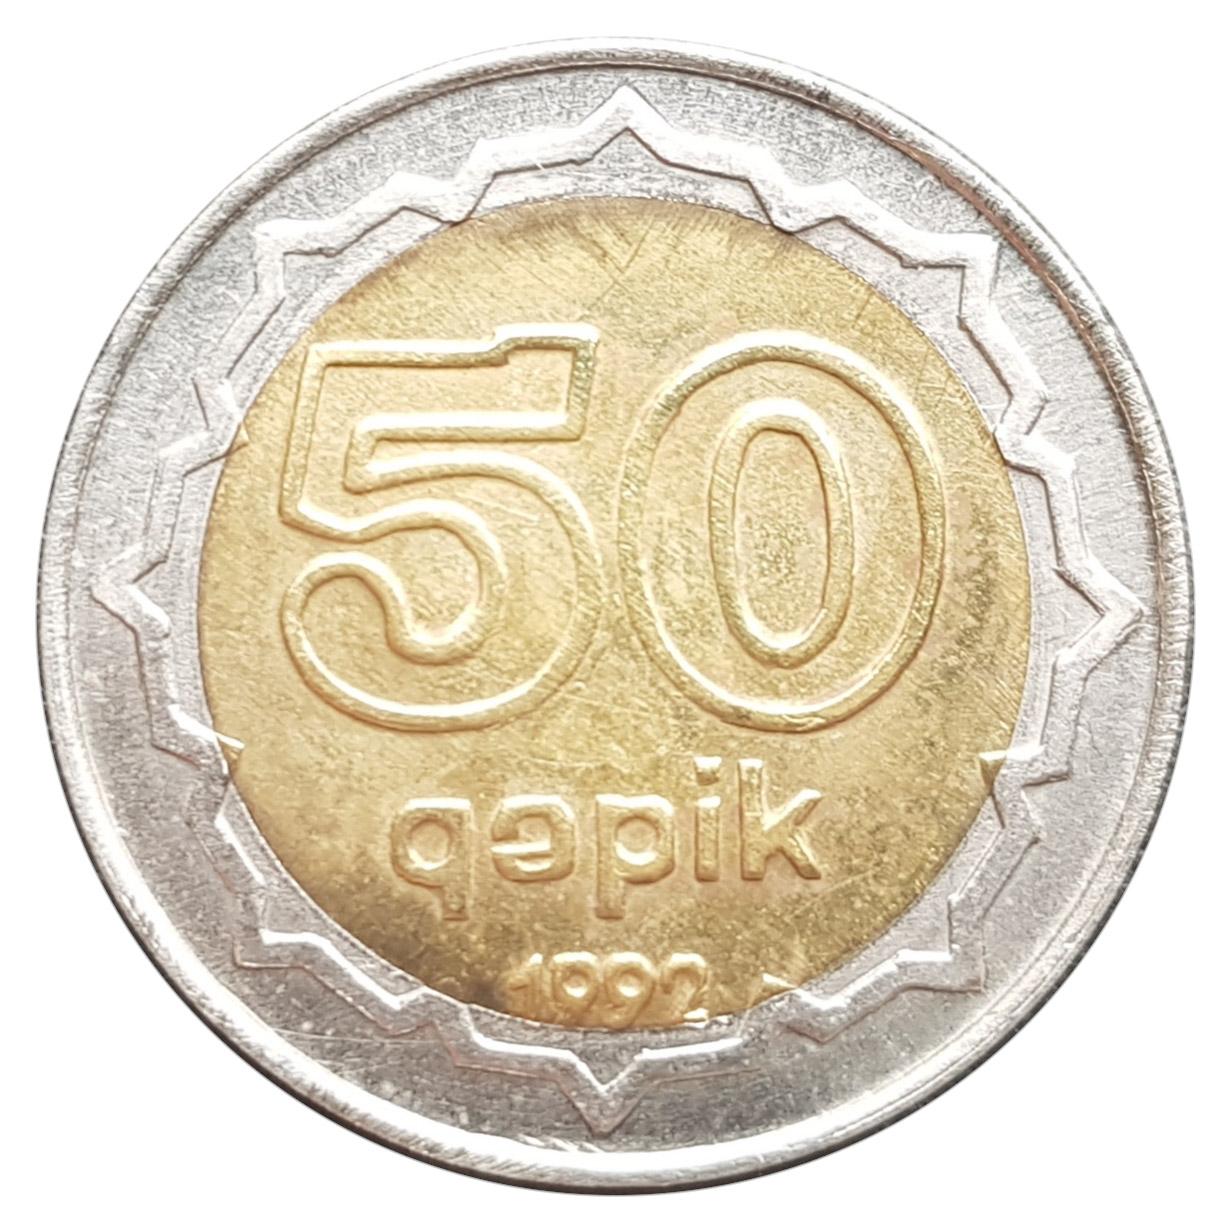 Азербайджанские монеты. 50 Qepik. Деньги Азербайджана монеты. 50 Манат монета. Монета Азербайджана 10.